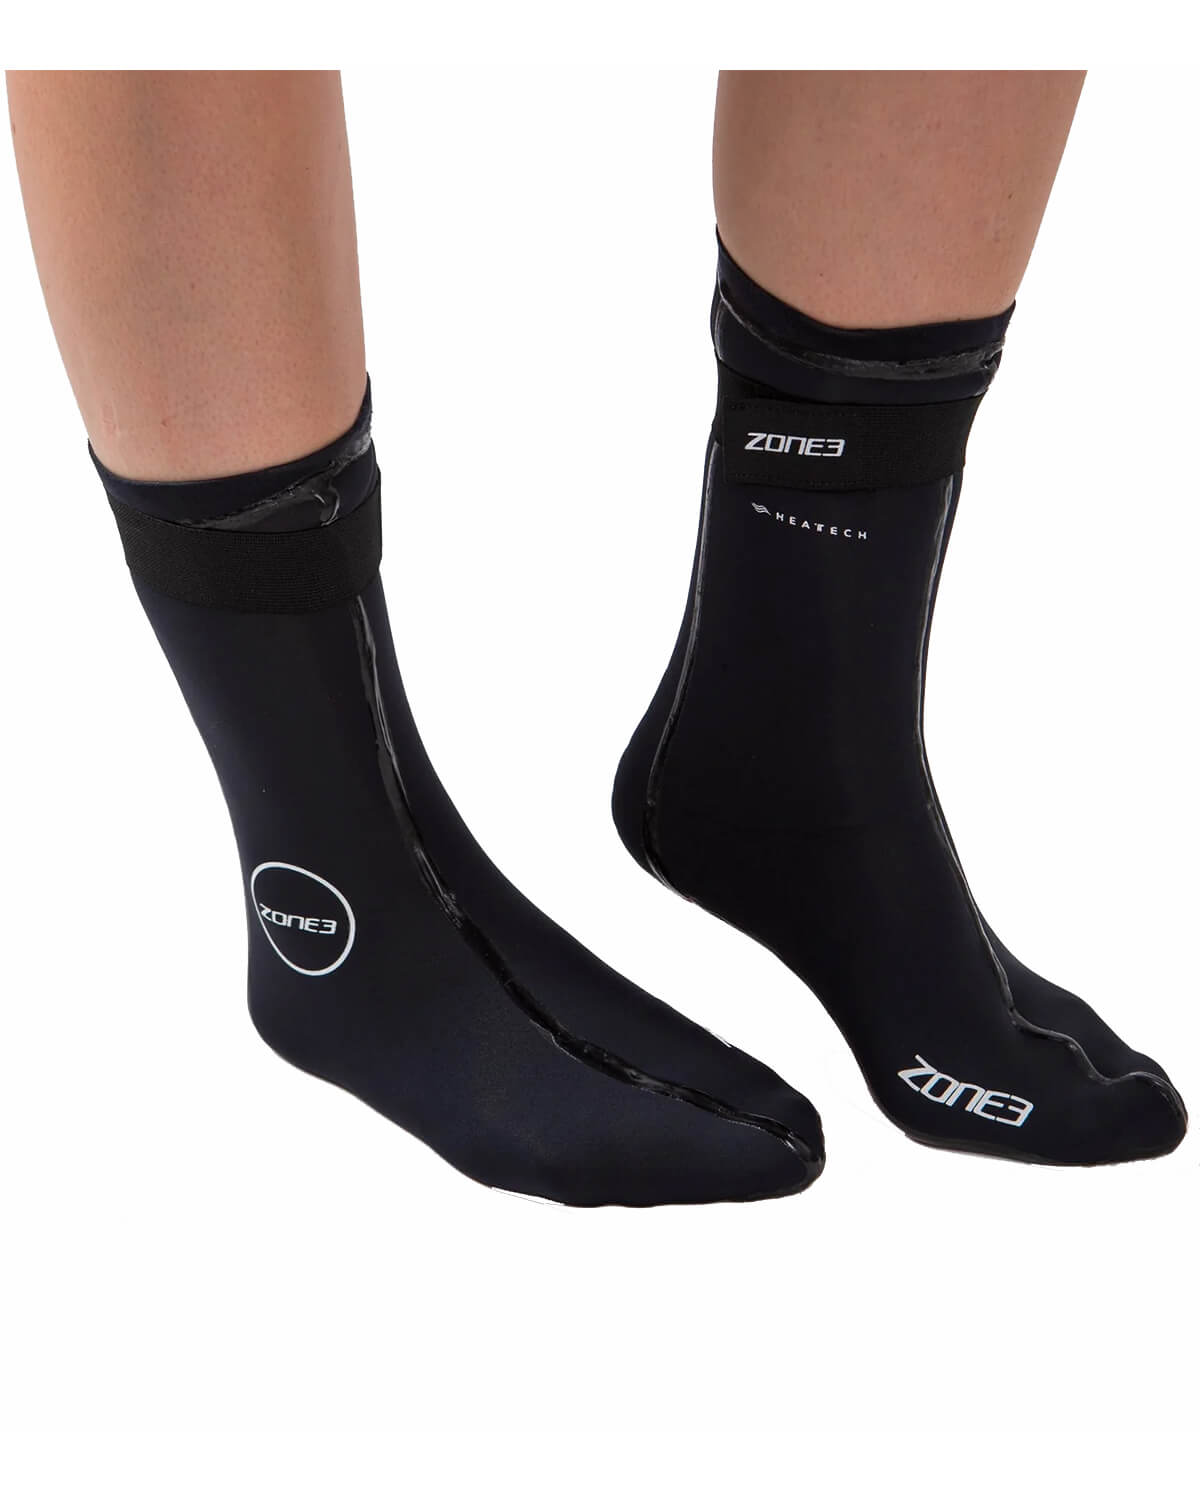 3.5mm Zone3 Heat-Tech Warmth Swim Socks